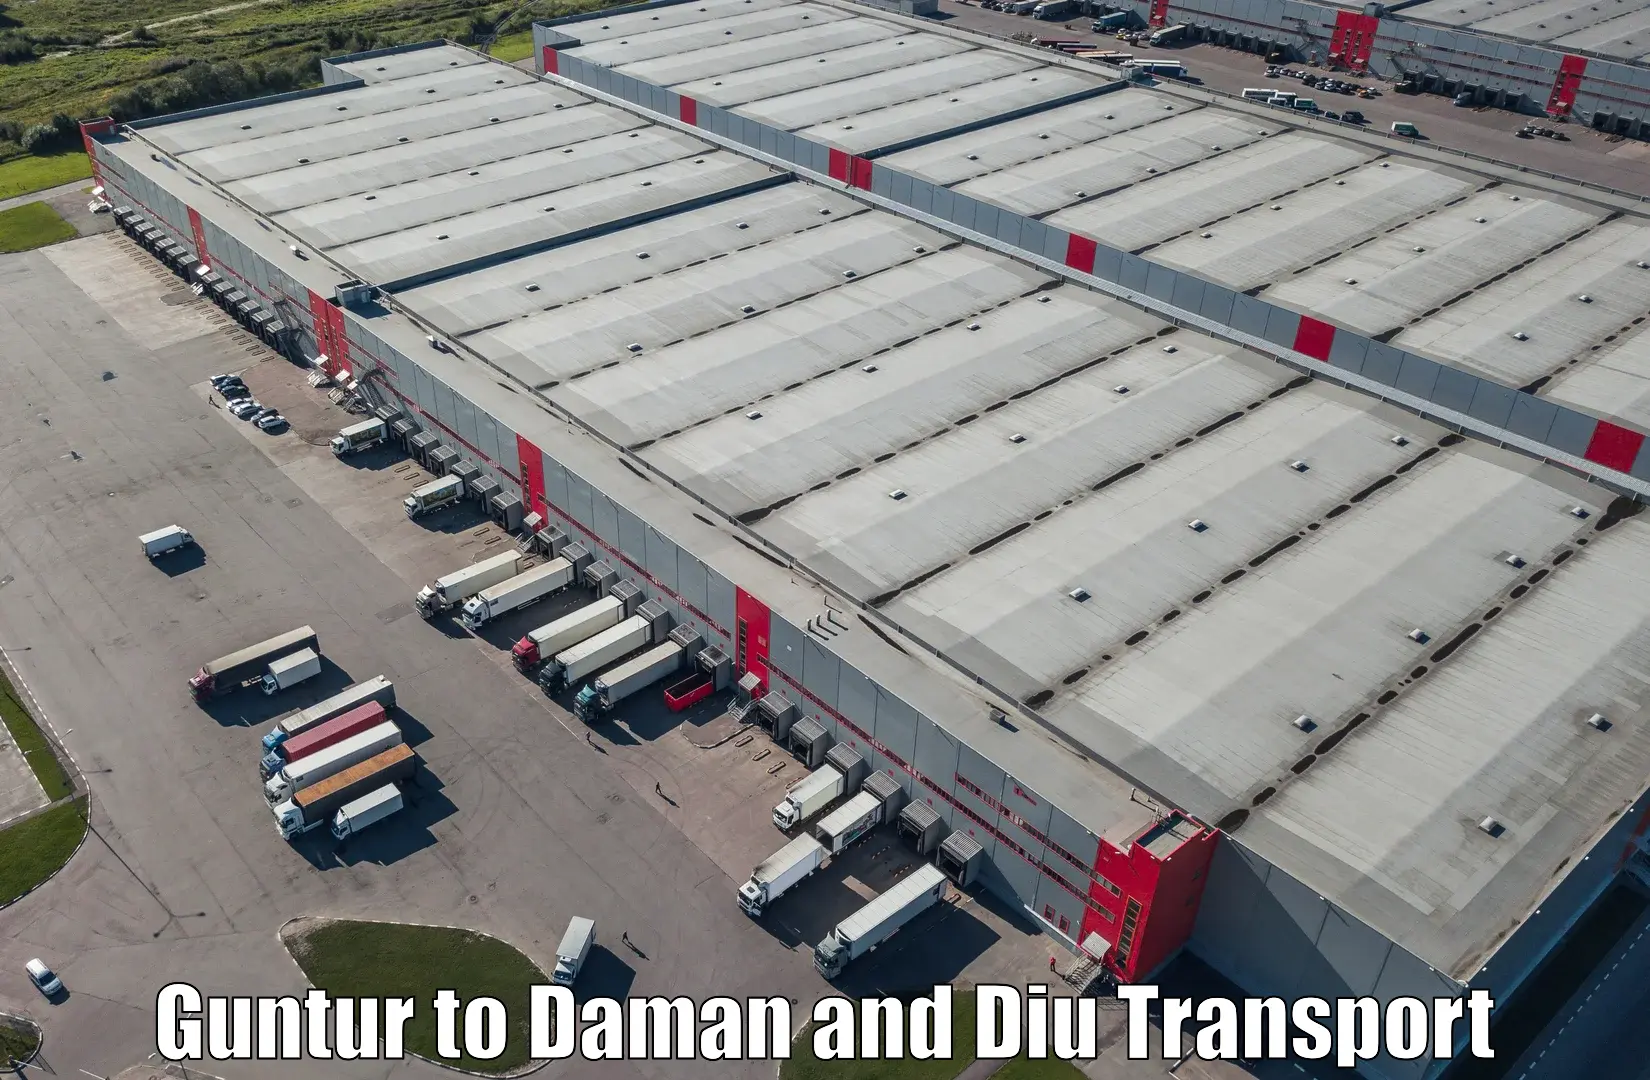 Daily transport service Guntur to Daman and Diu